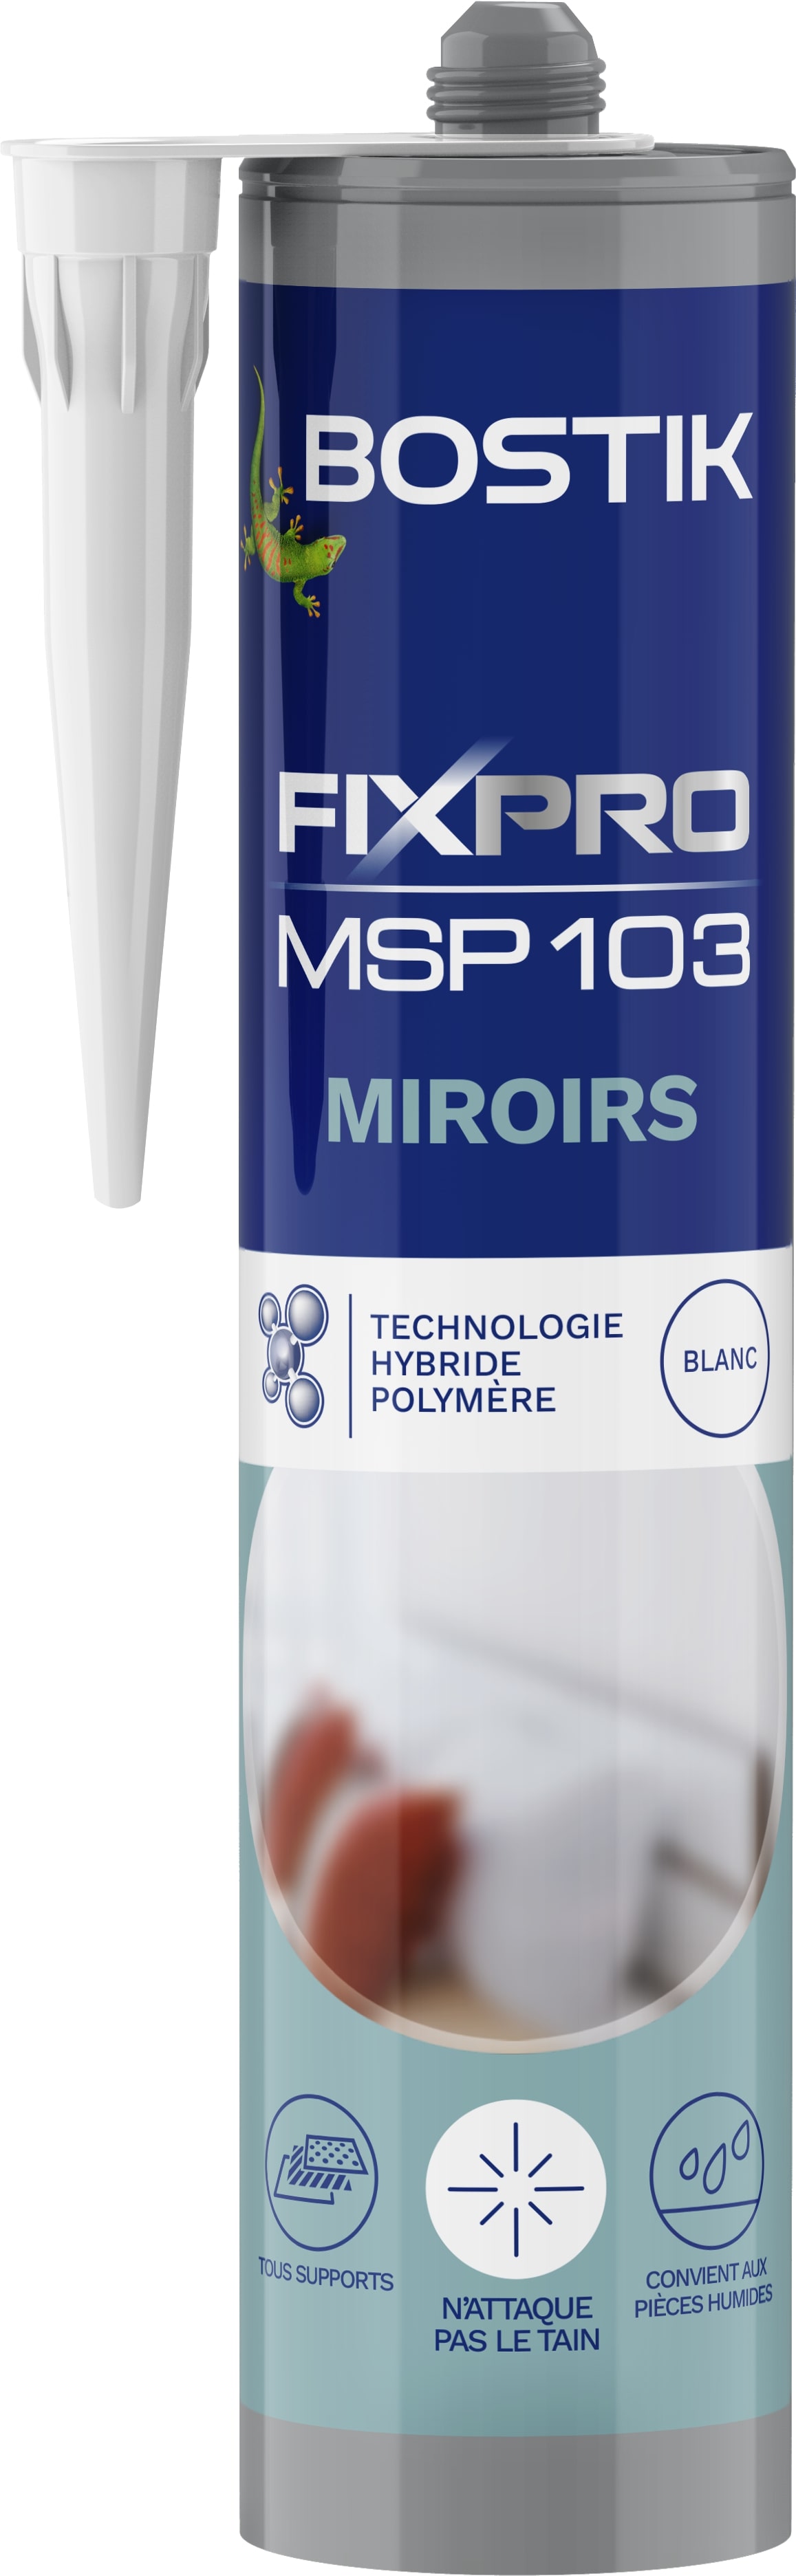 Colle Mastic FIXPRO MSP 103 Miroirs 290ml - BOSTIK